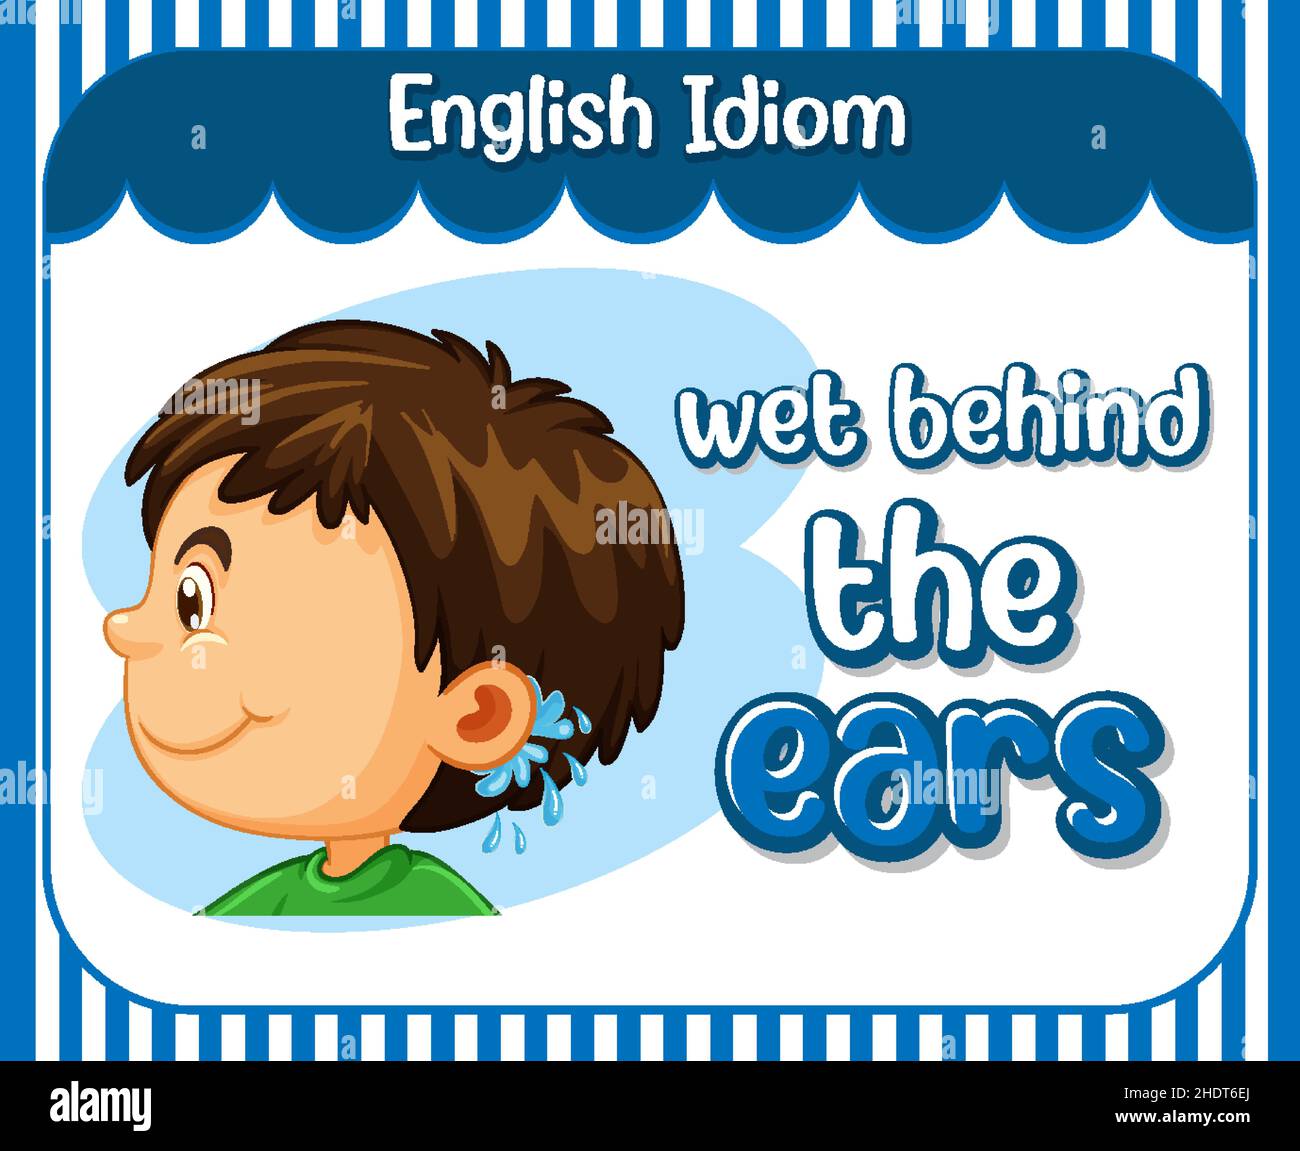 O que significa a expressão PLAY IT BY EAR em inglês?